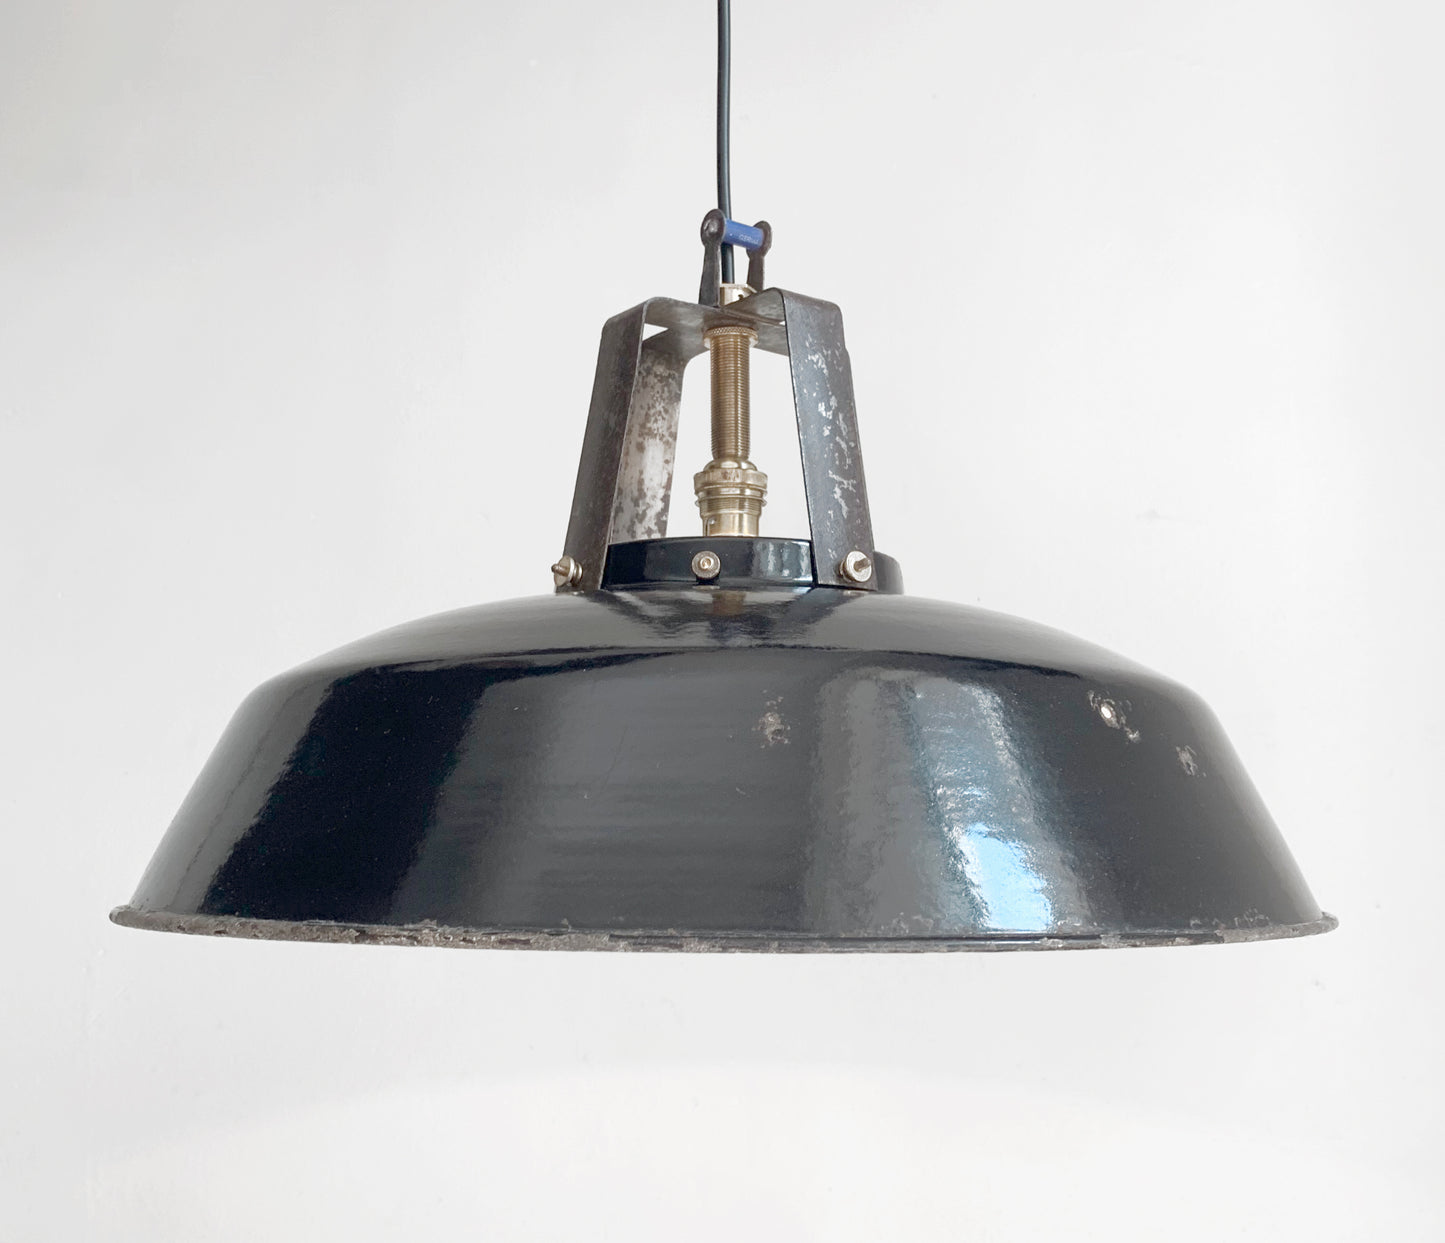 Large Vintage French Black Enamel Industrial Pendant Lamp - Light / 45cm Across